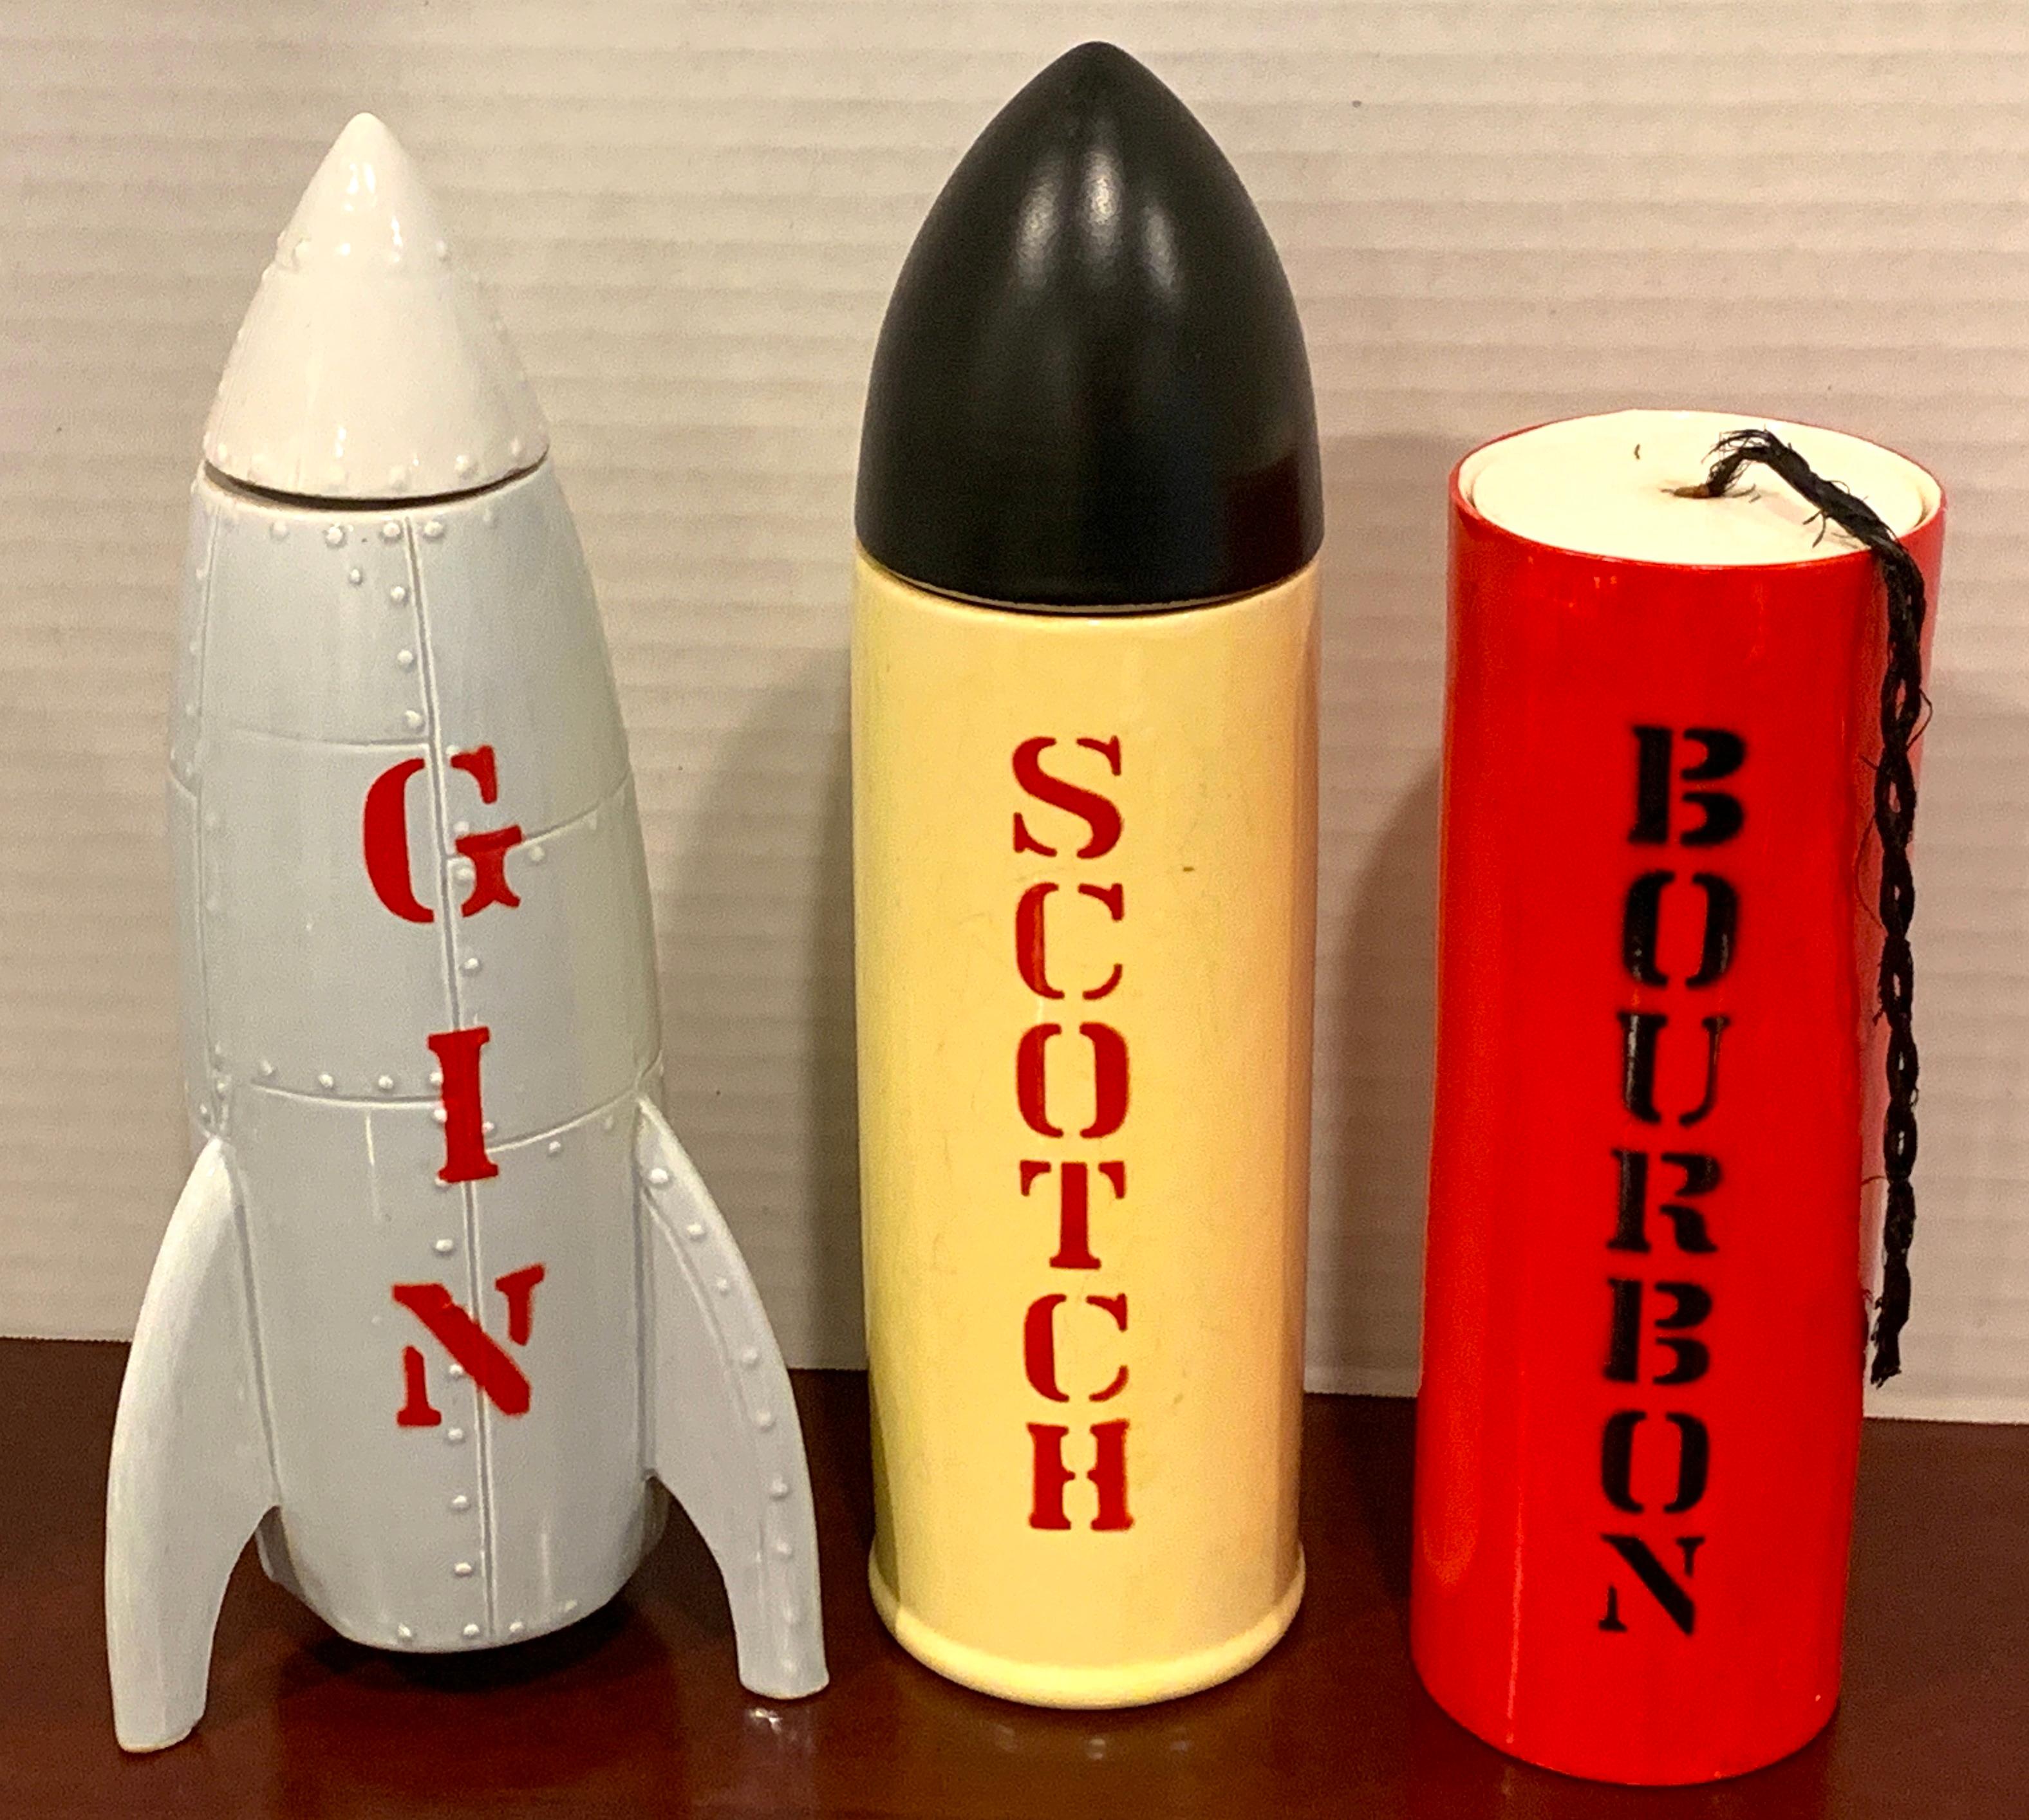 Atomic age three-piece decanter set by Davar Originals, 1961
Consisting of :
Rocket- 